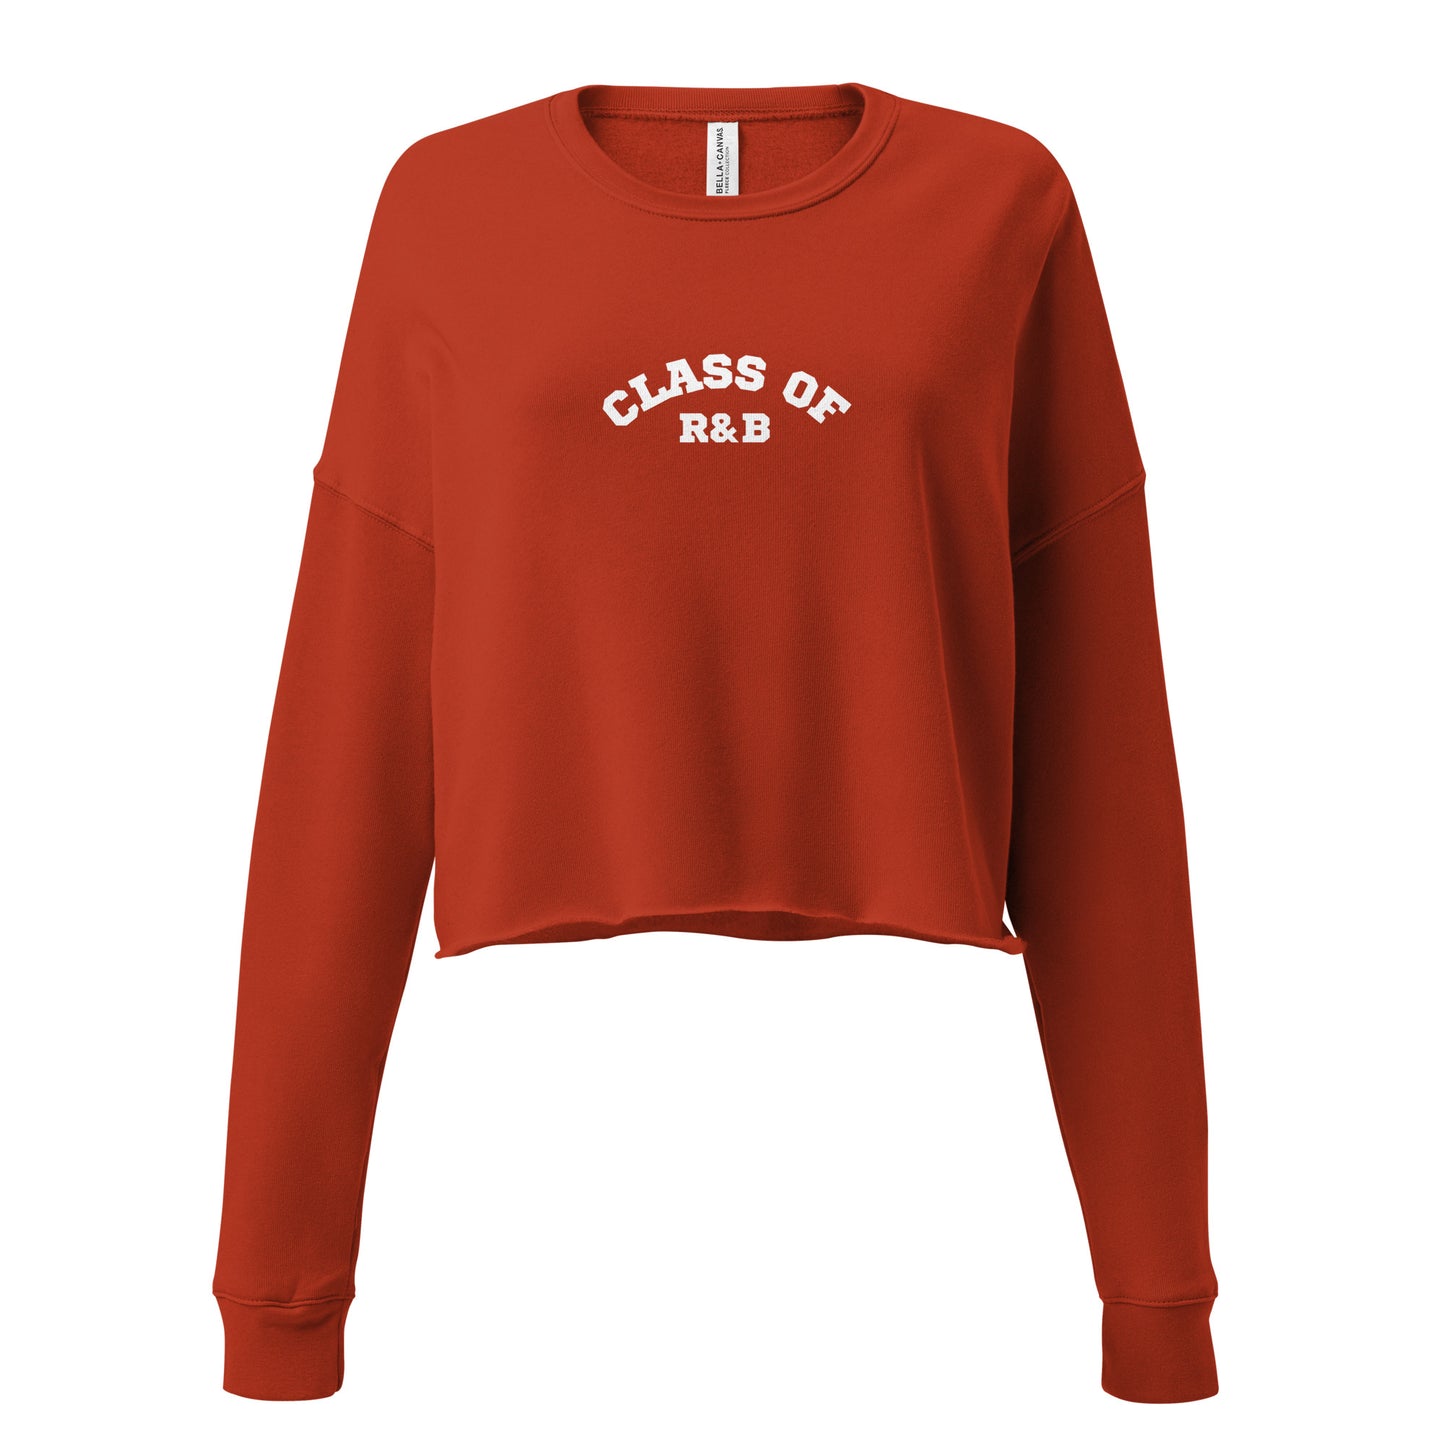 Class of R&B Crop Sweatshirt